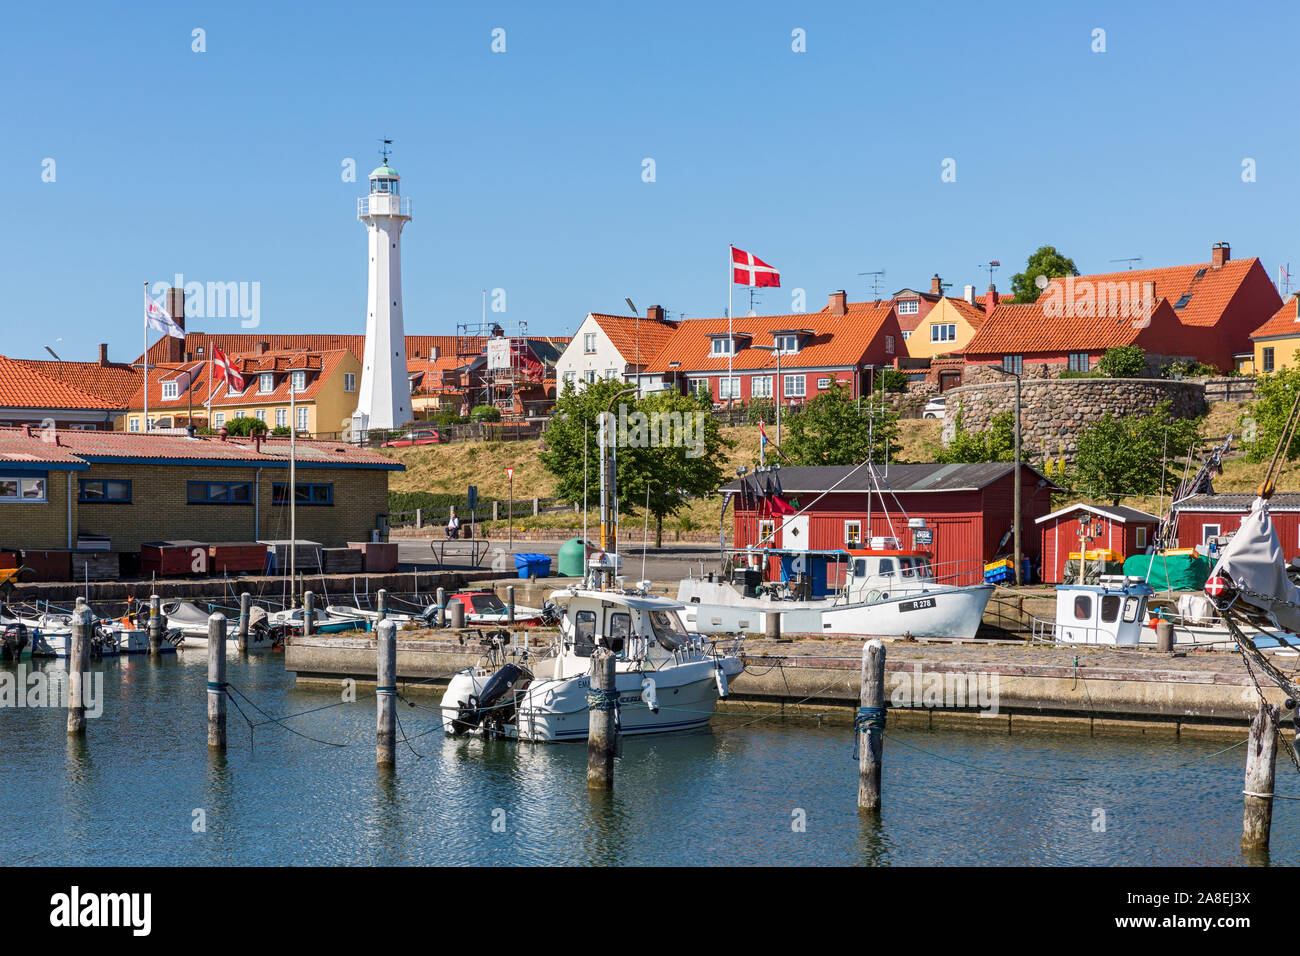 Rønne; Bornholm Hafen, Boote, Segelschiff, Wohnhaeuser, Nikolai Kirche Foto Stock